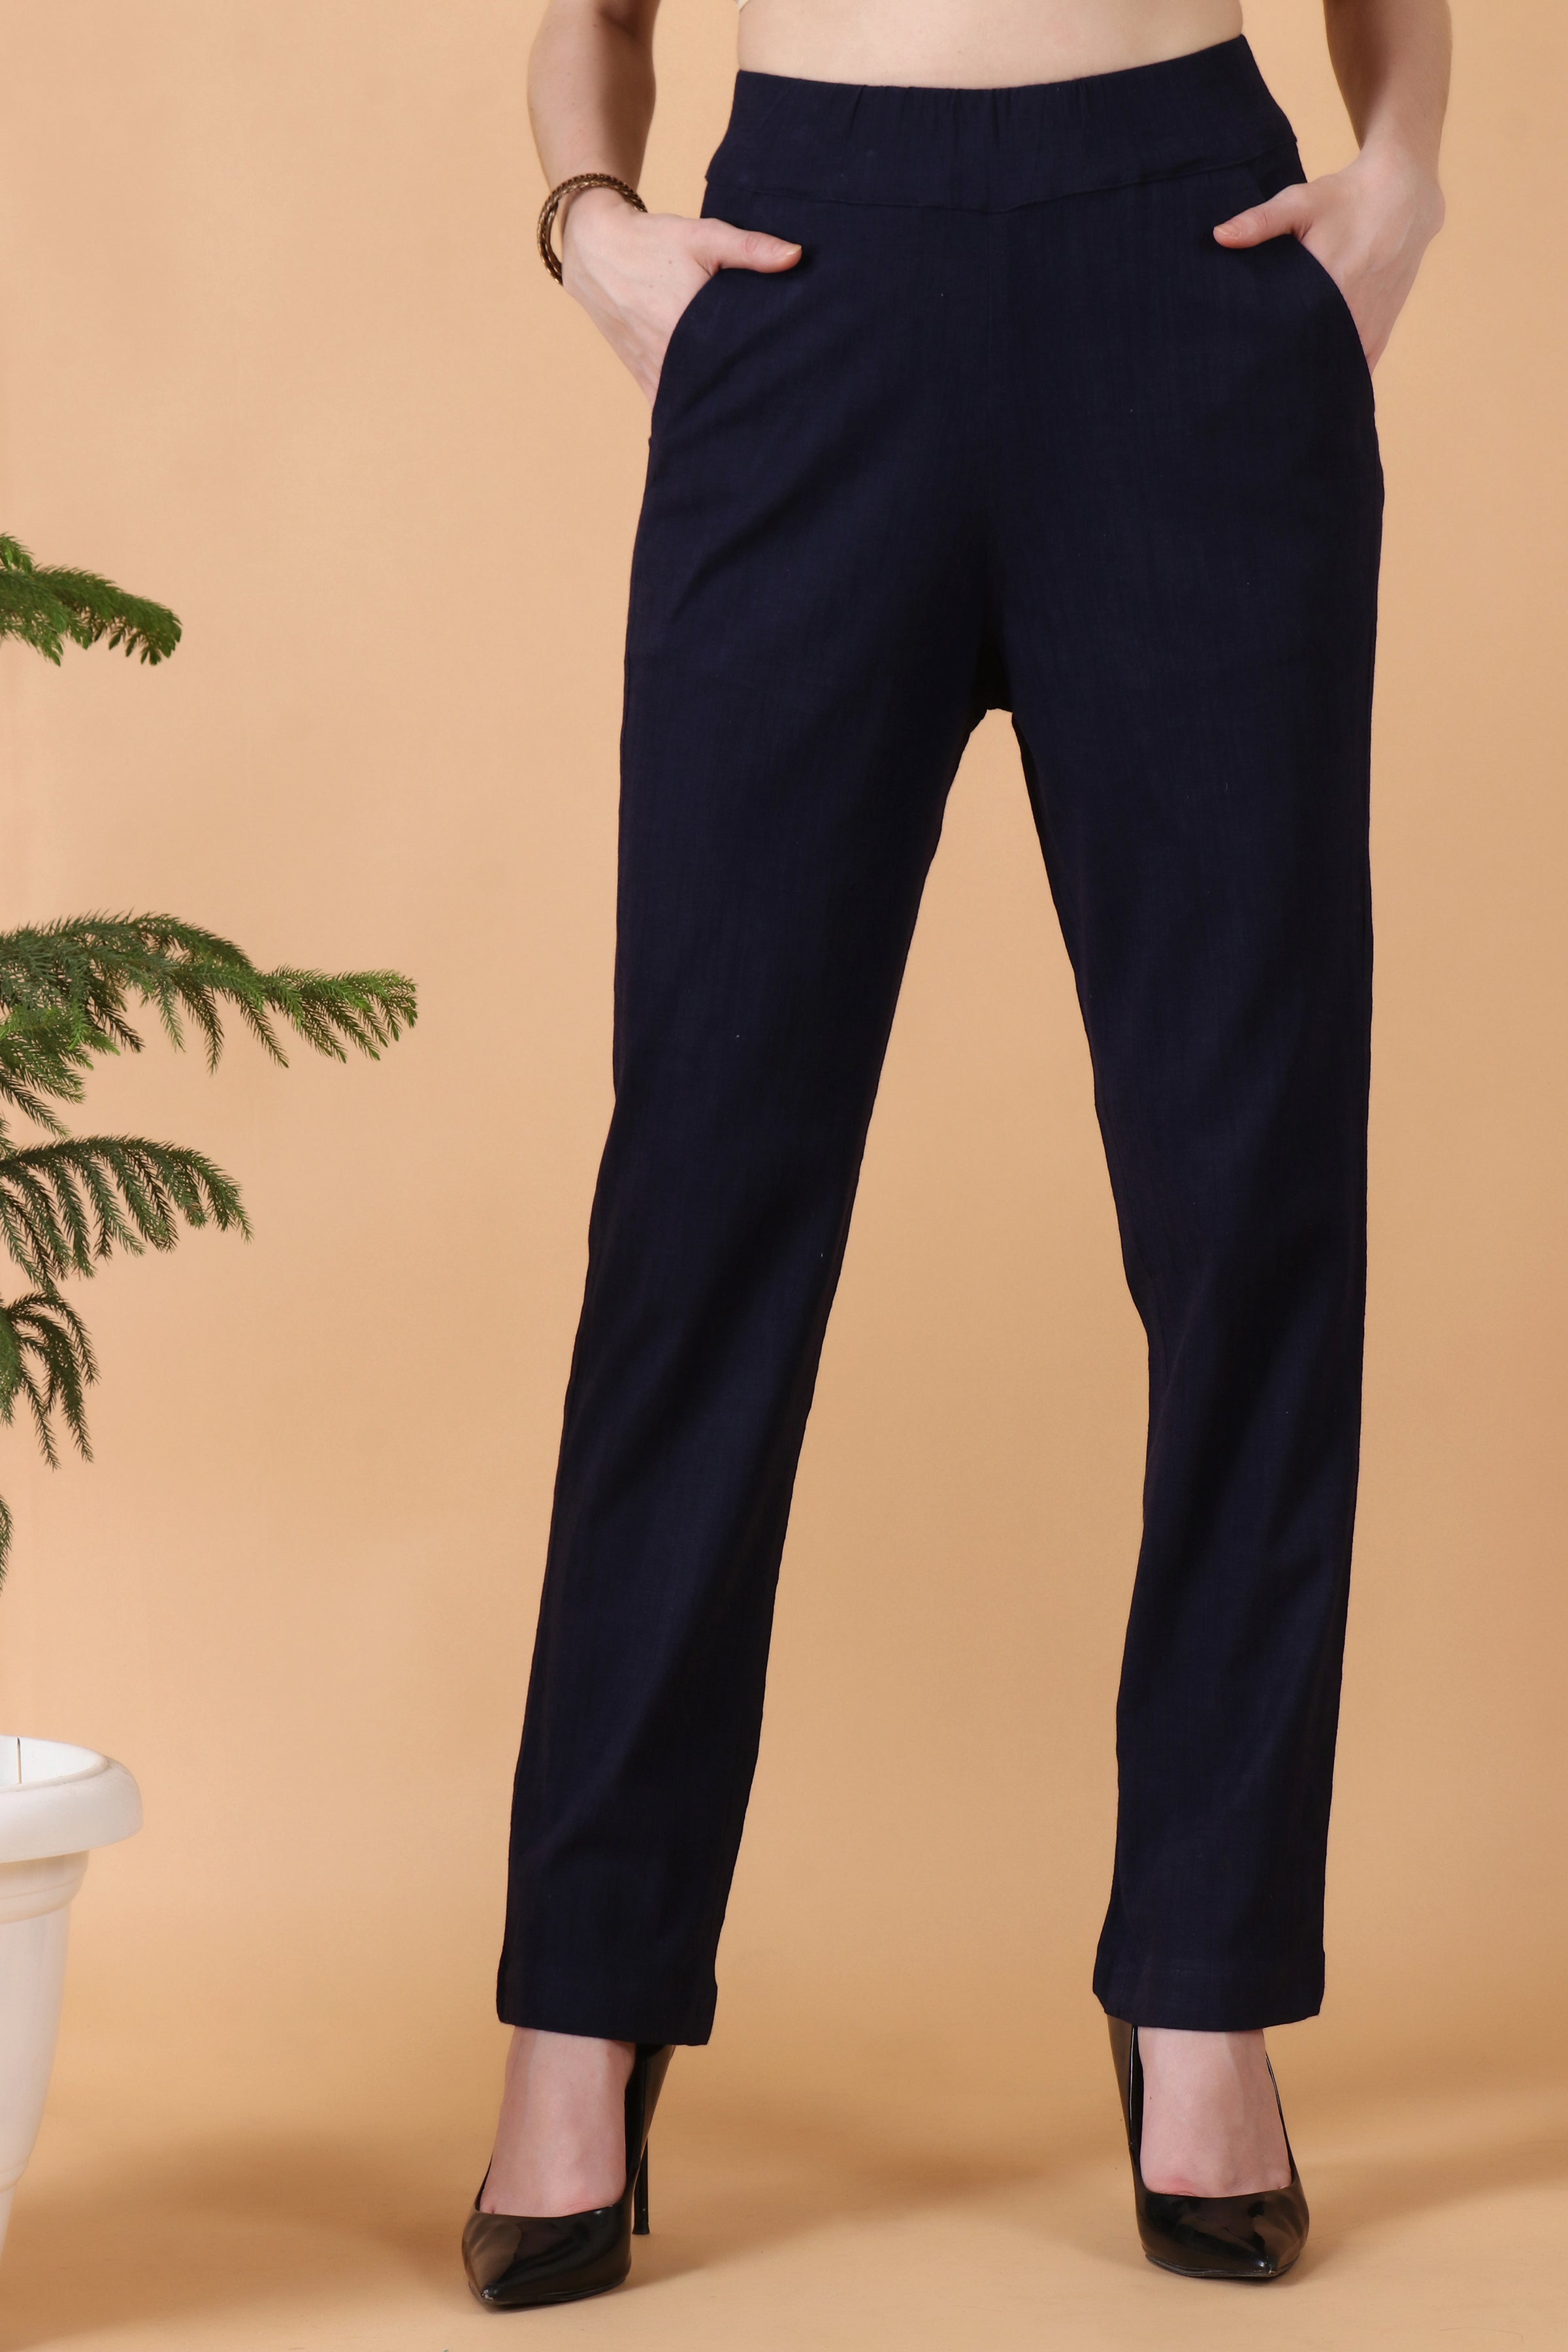 Women's Ultra Lux Comfort with Flex Motion Trouser Pant (Plus)